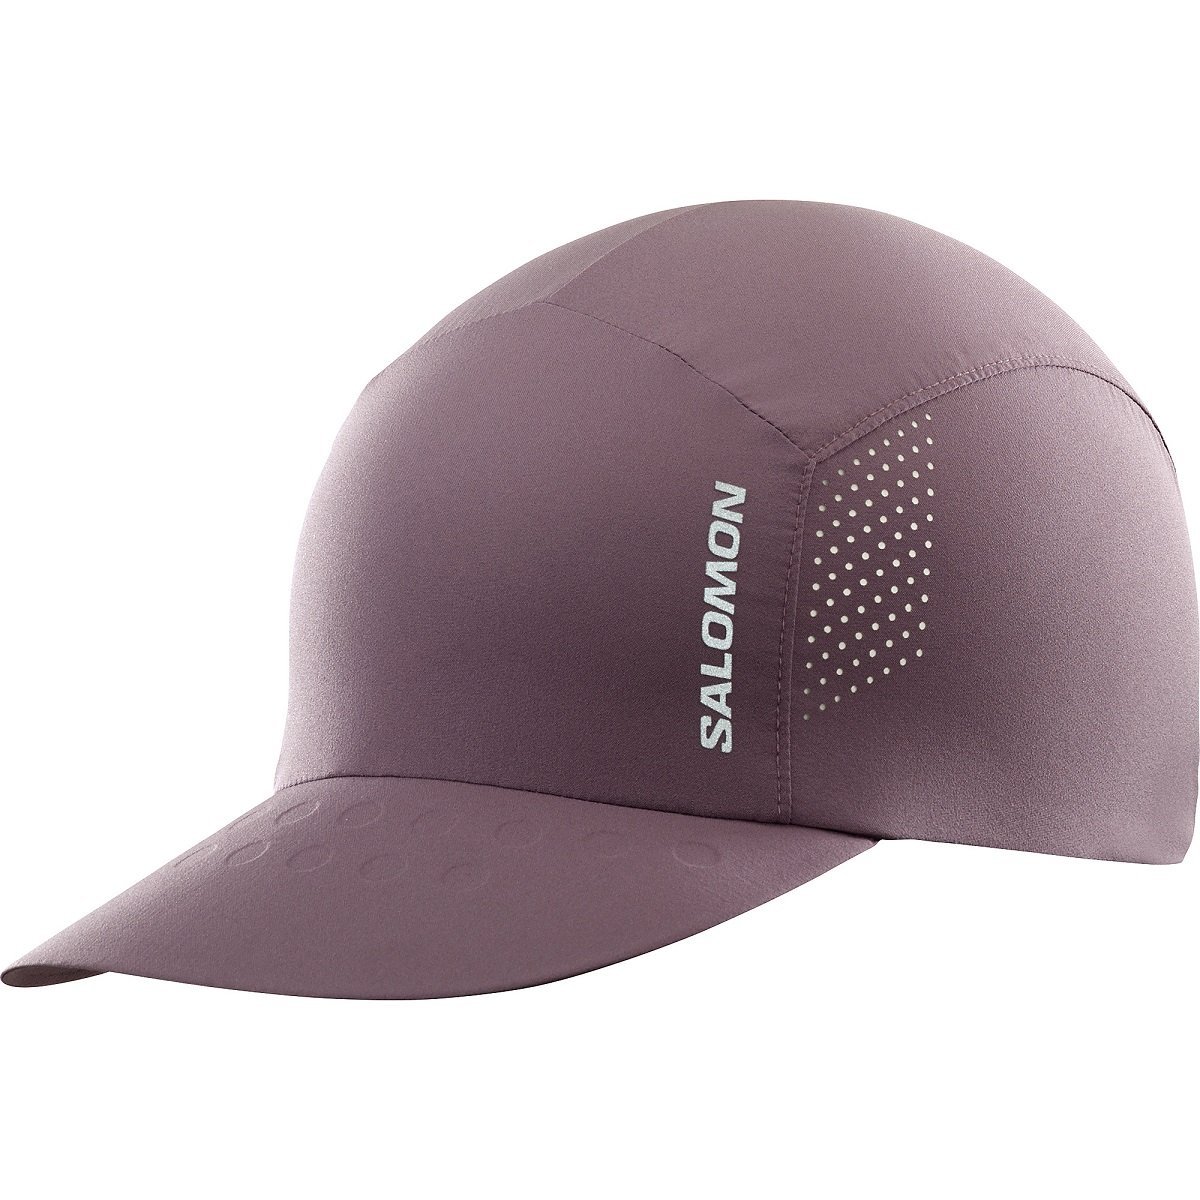 Šiltovka Salomon Cross Compact Cap - fialová